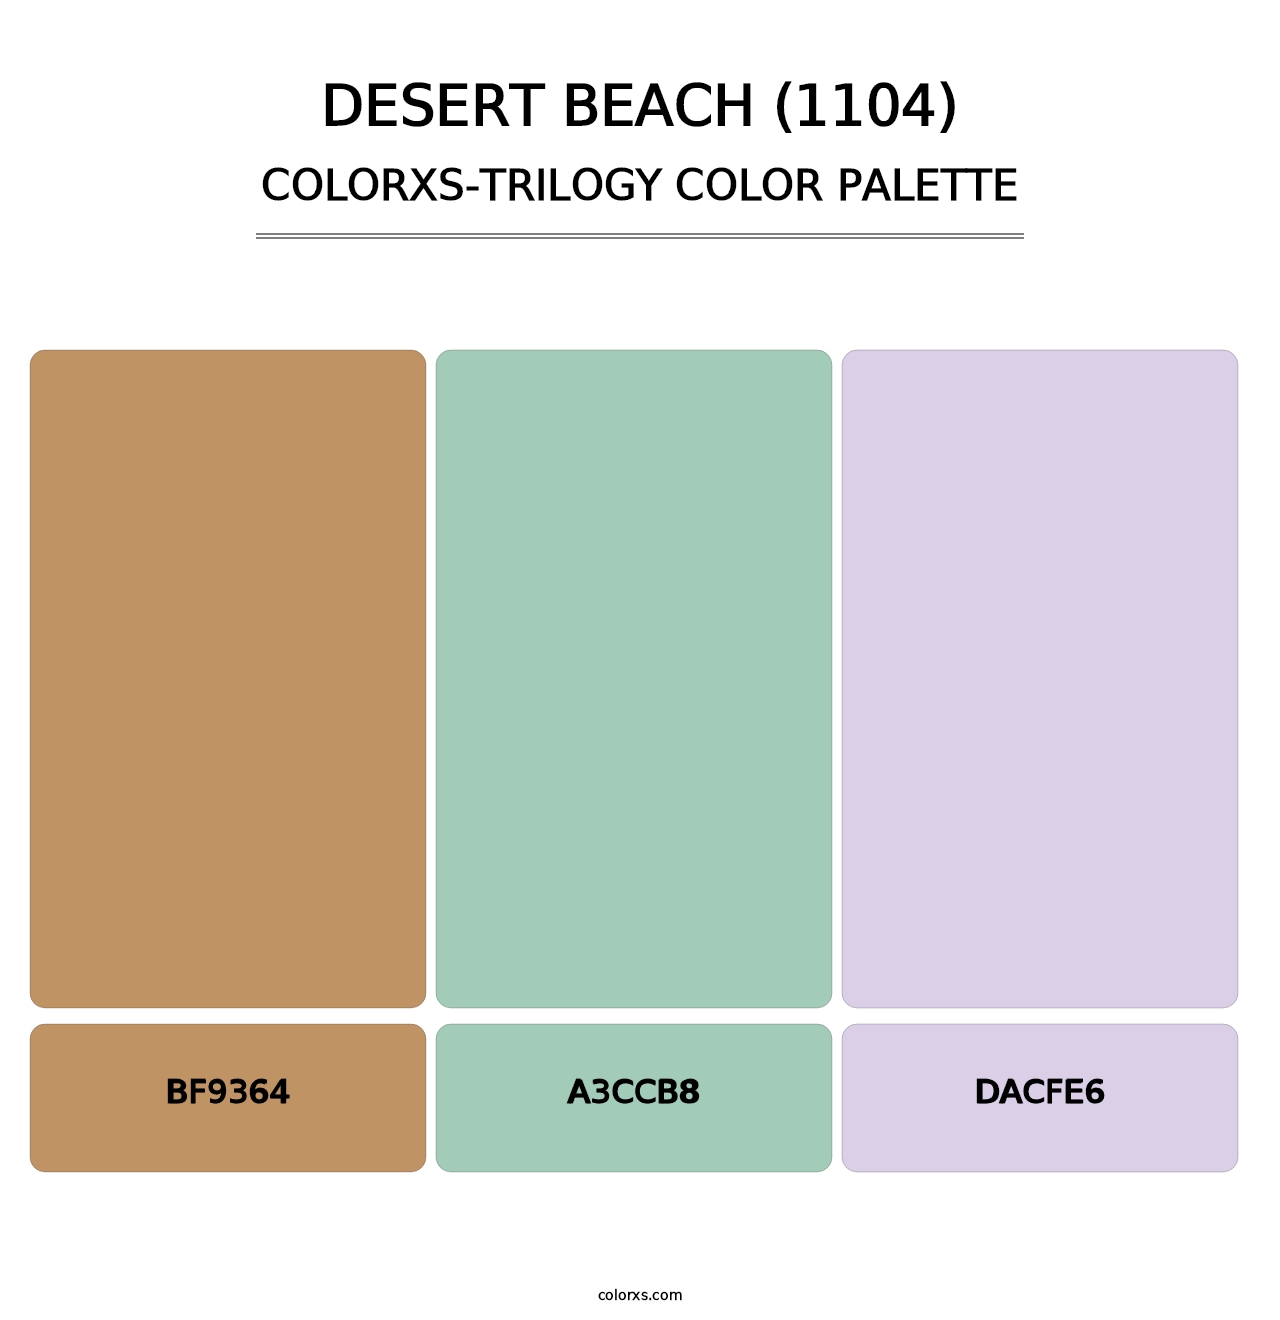 Desert Beach (1104) - Colorxs Trilogy Palette